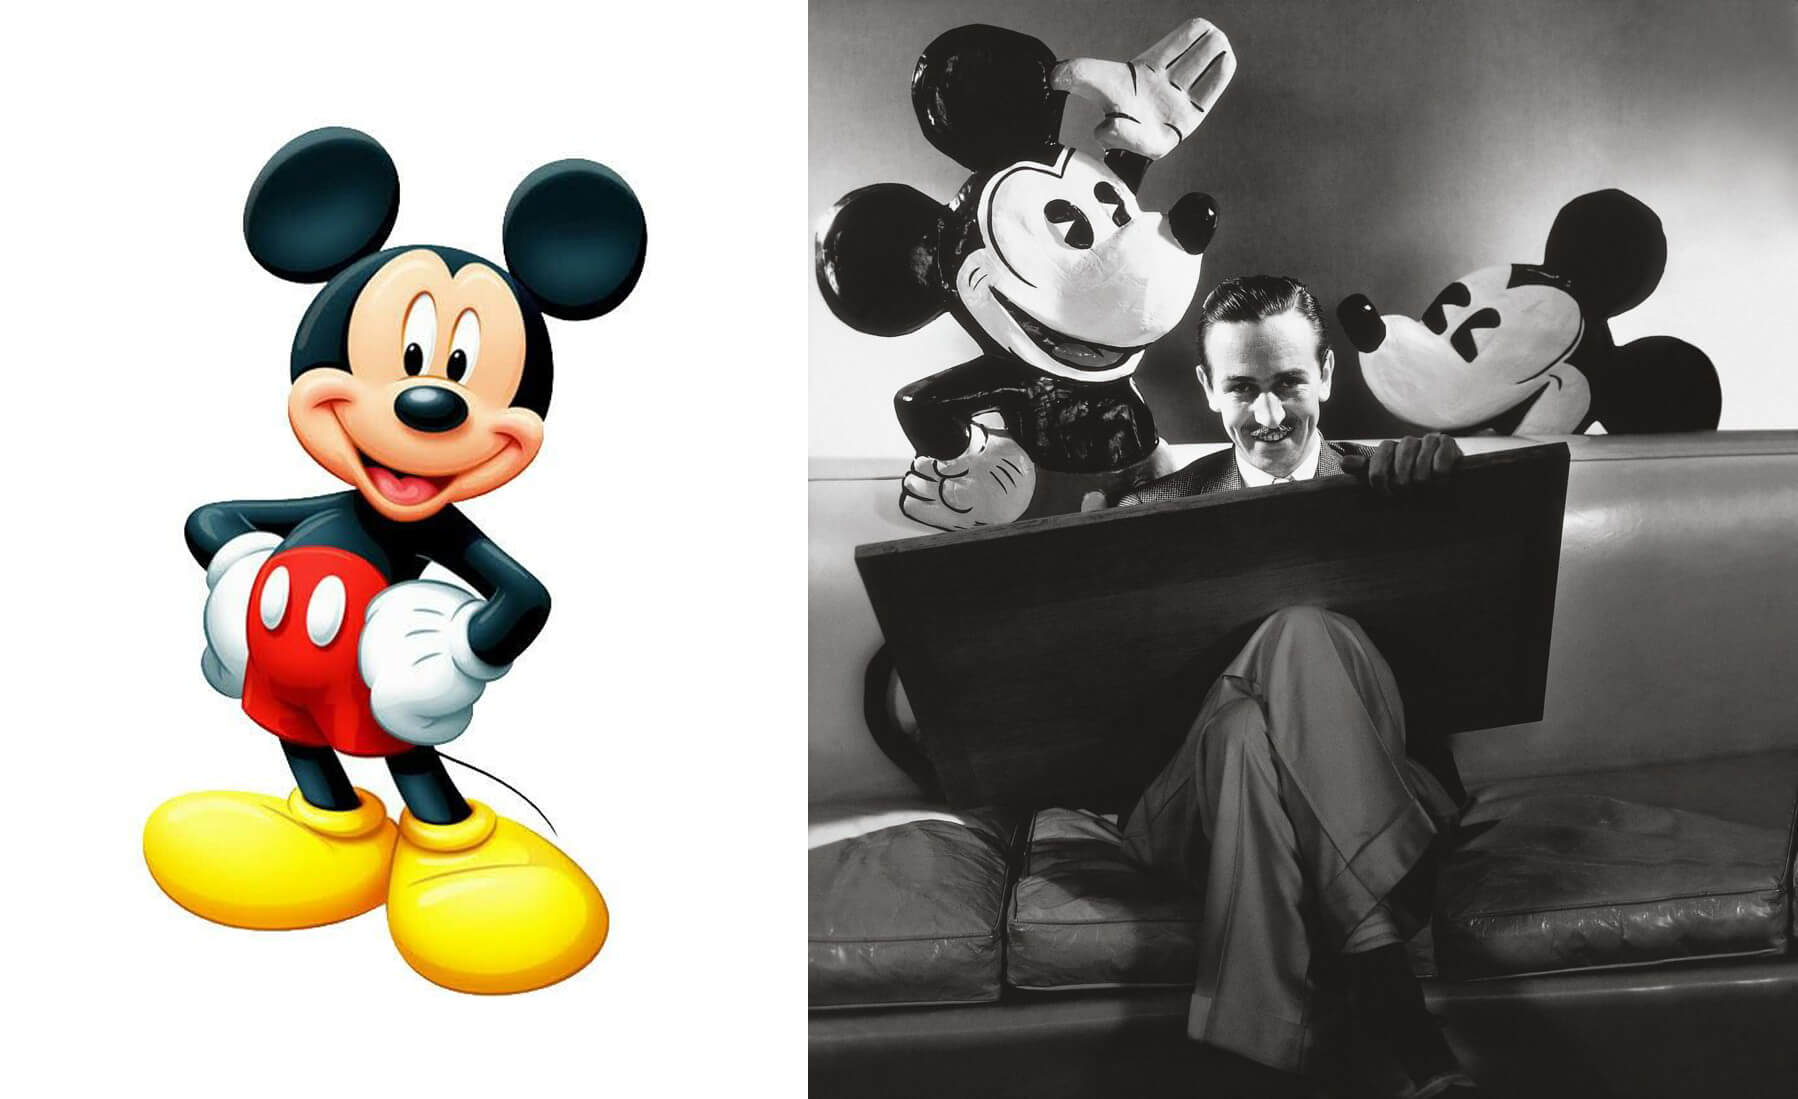 Mickey Mouse by The Walt Disney Company